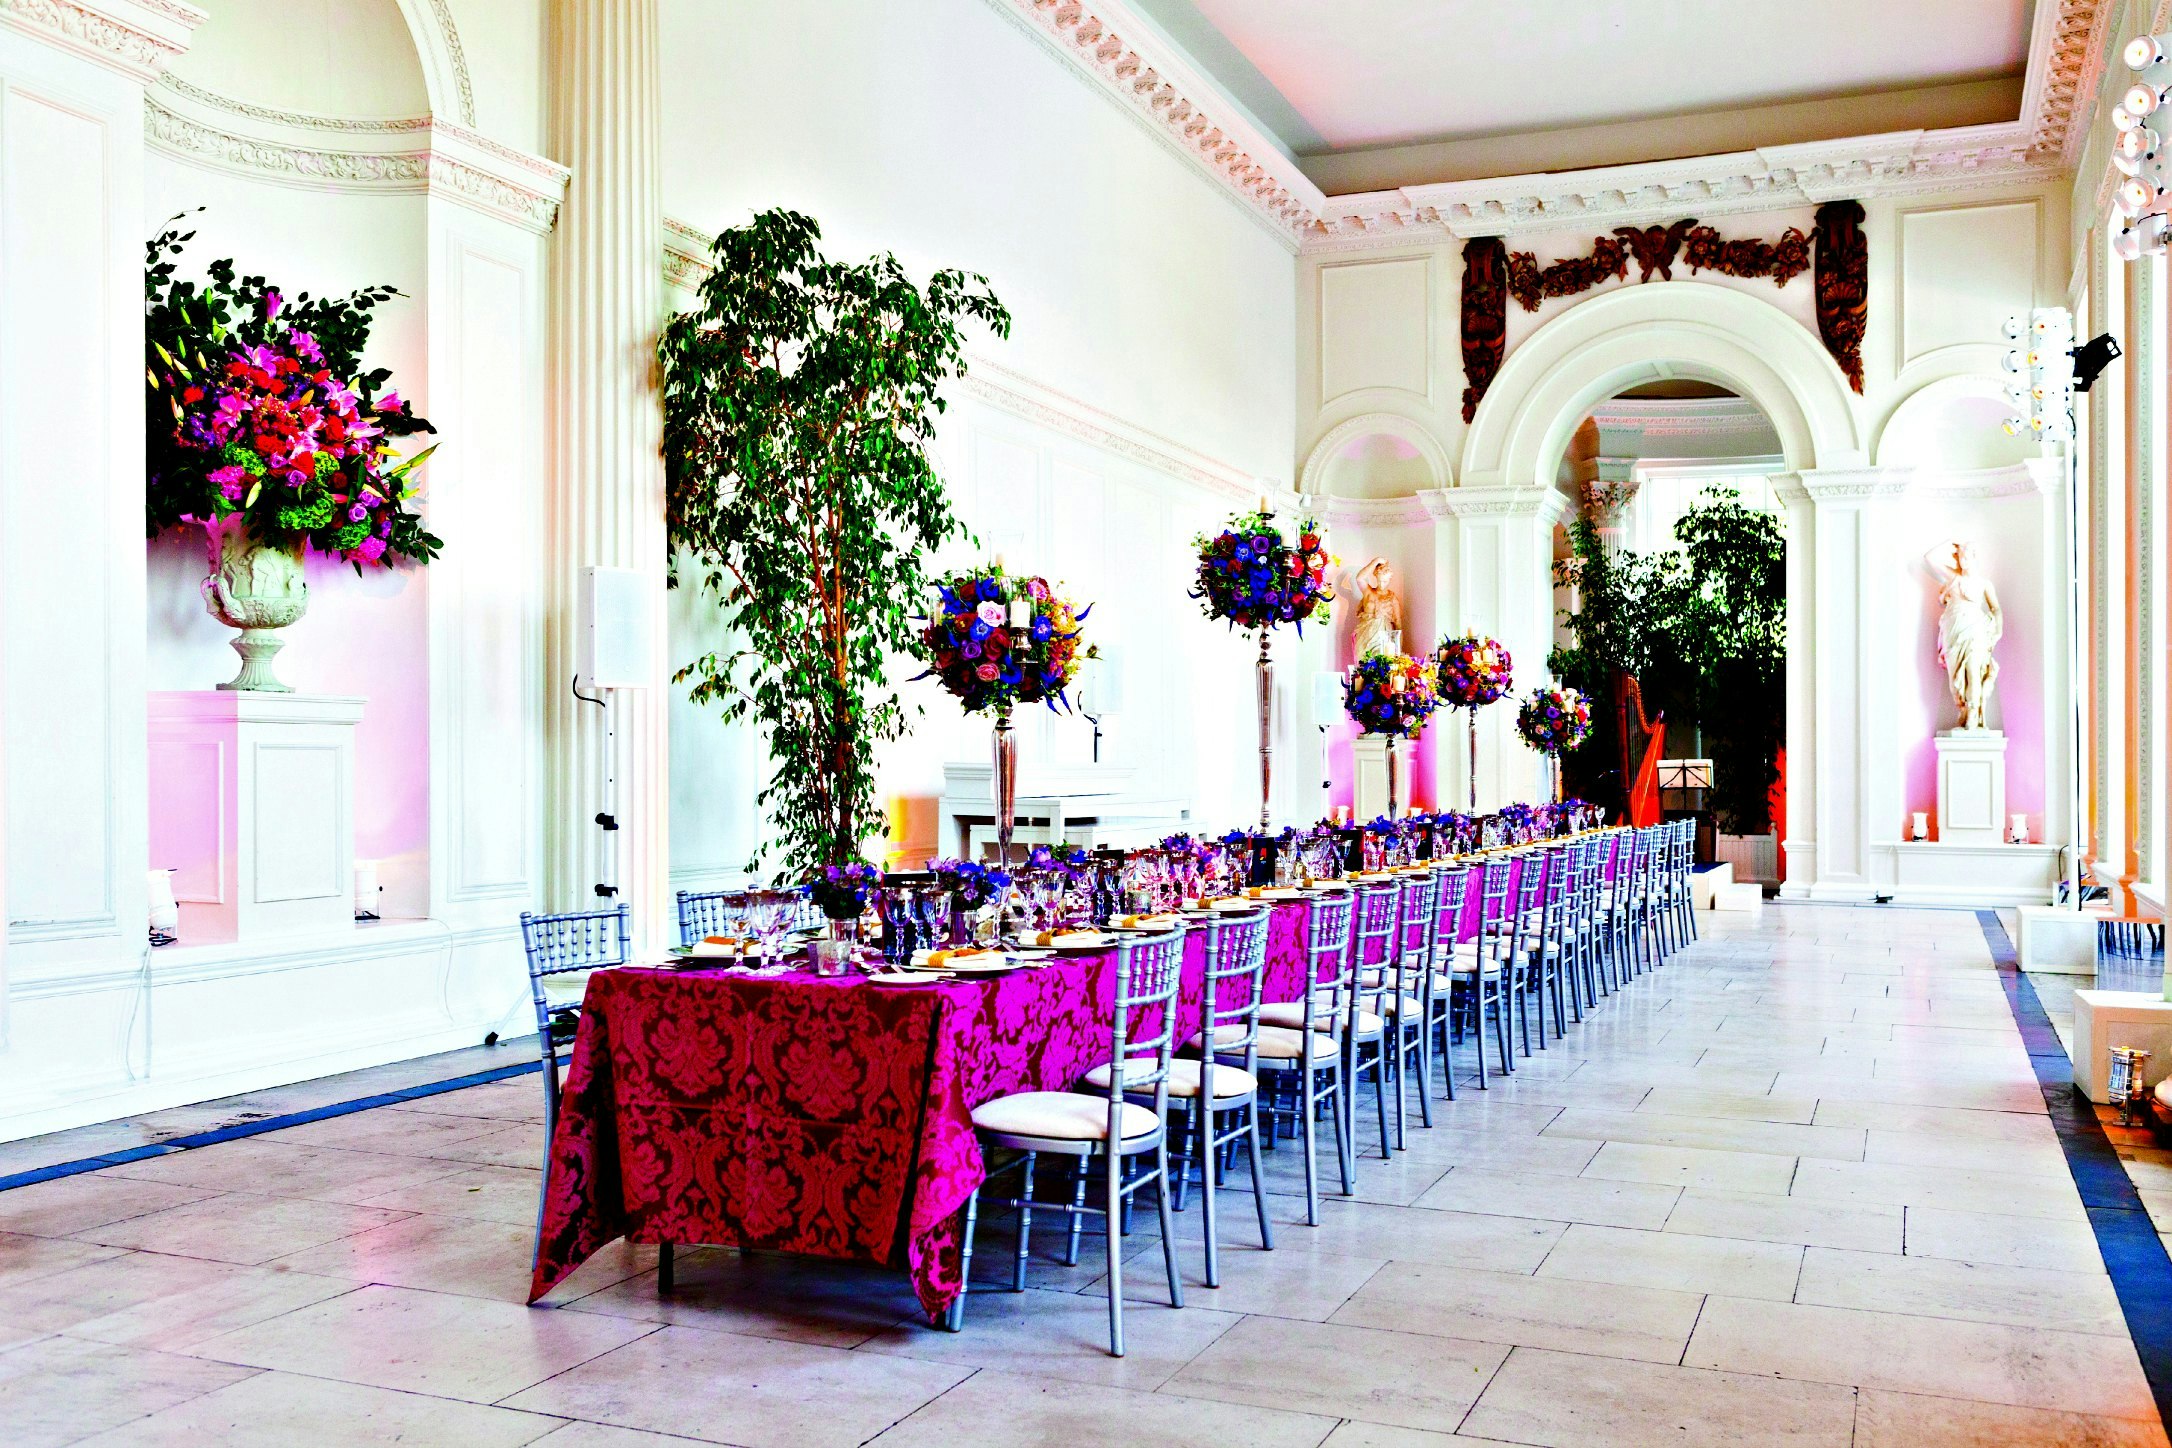 Outdoor Wedding Venues in London - Kensington Palace